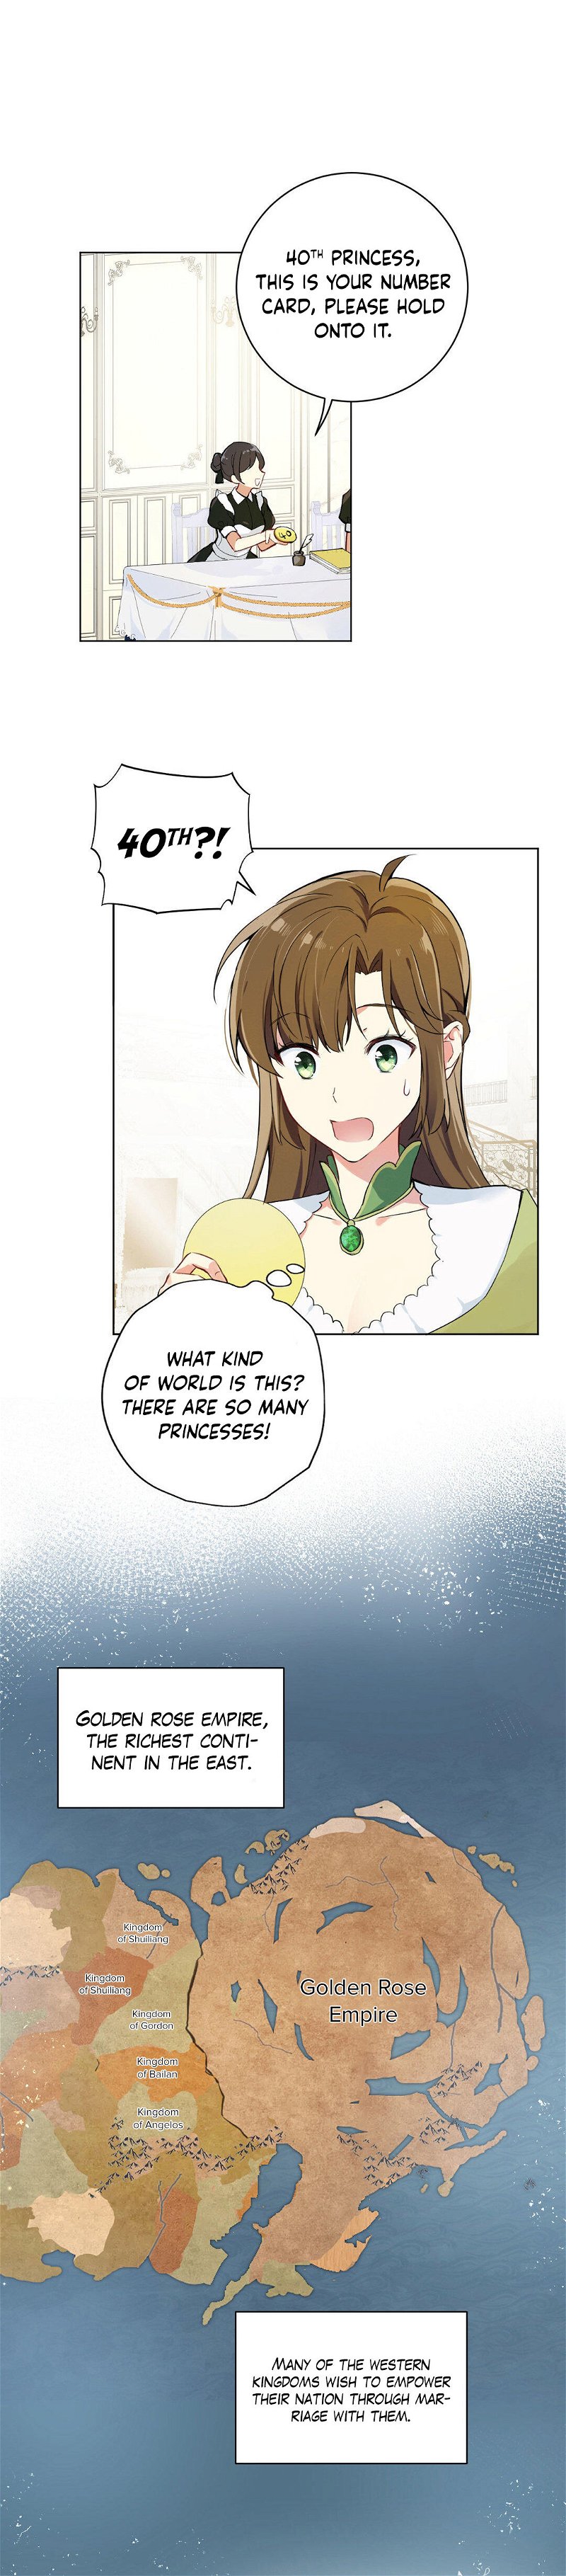 Princess Wars Chapter 2 - Page 2